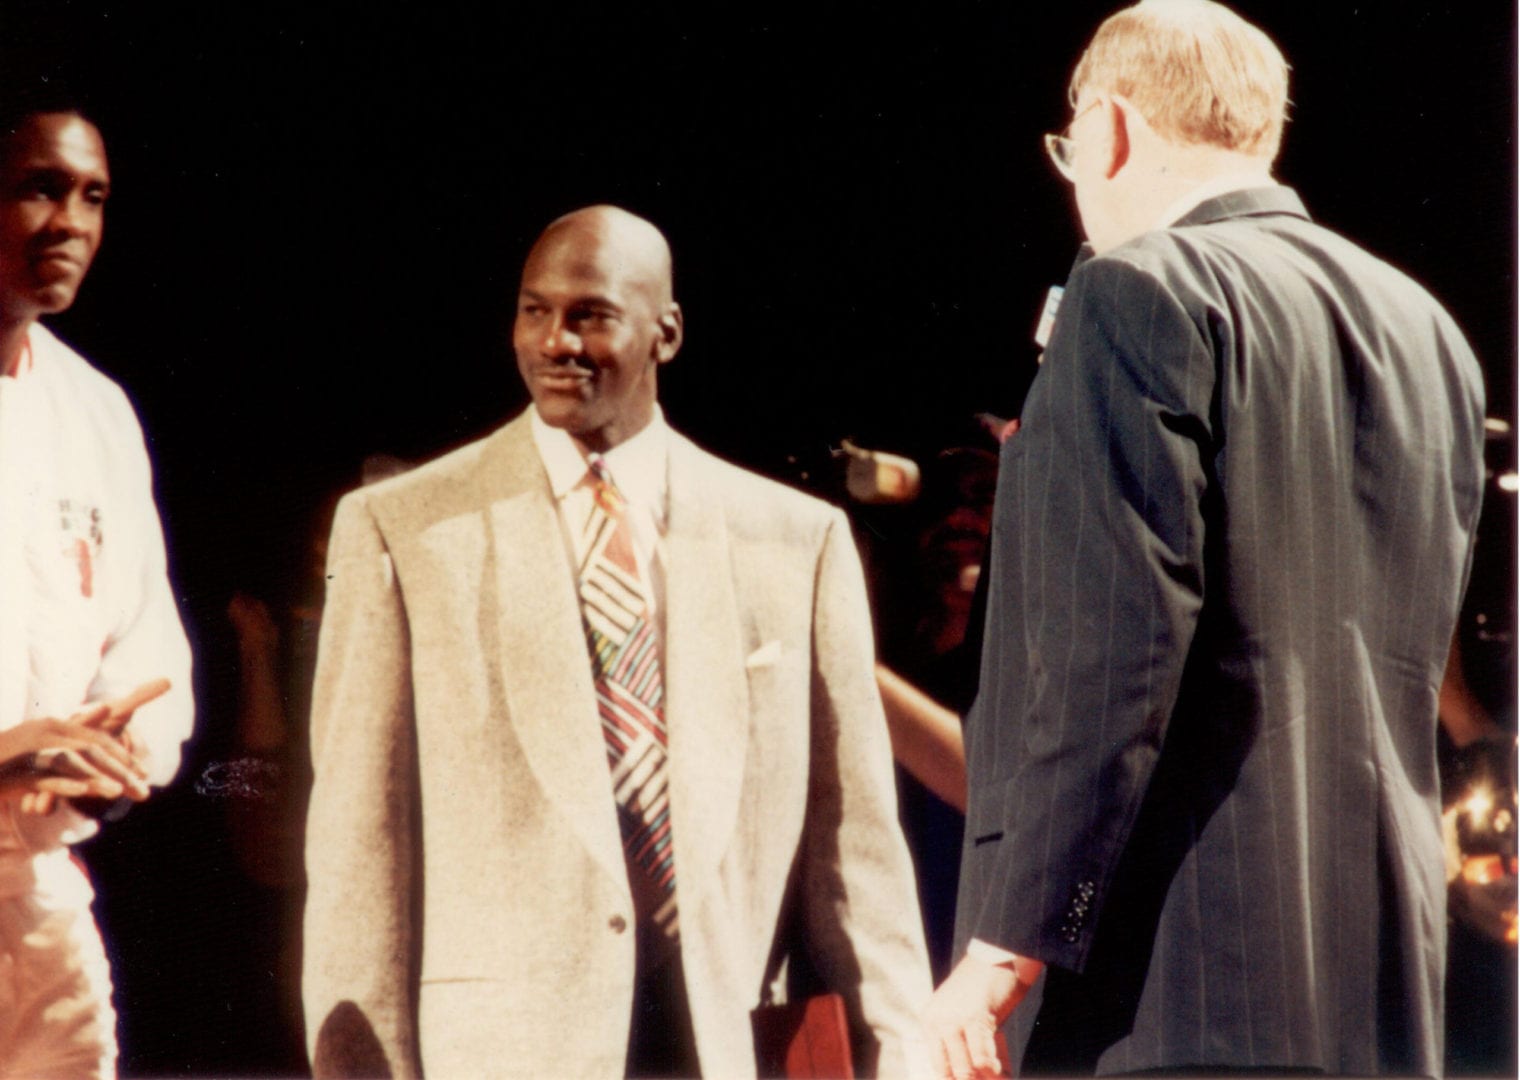 MJ wearing a bright coat